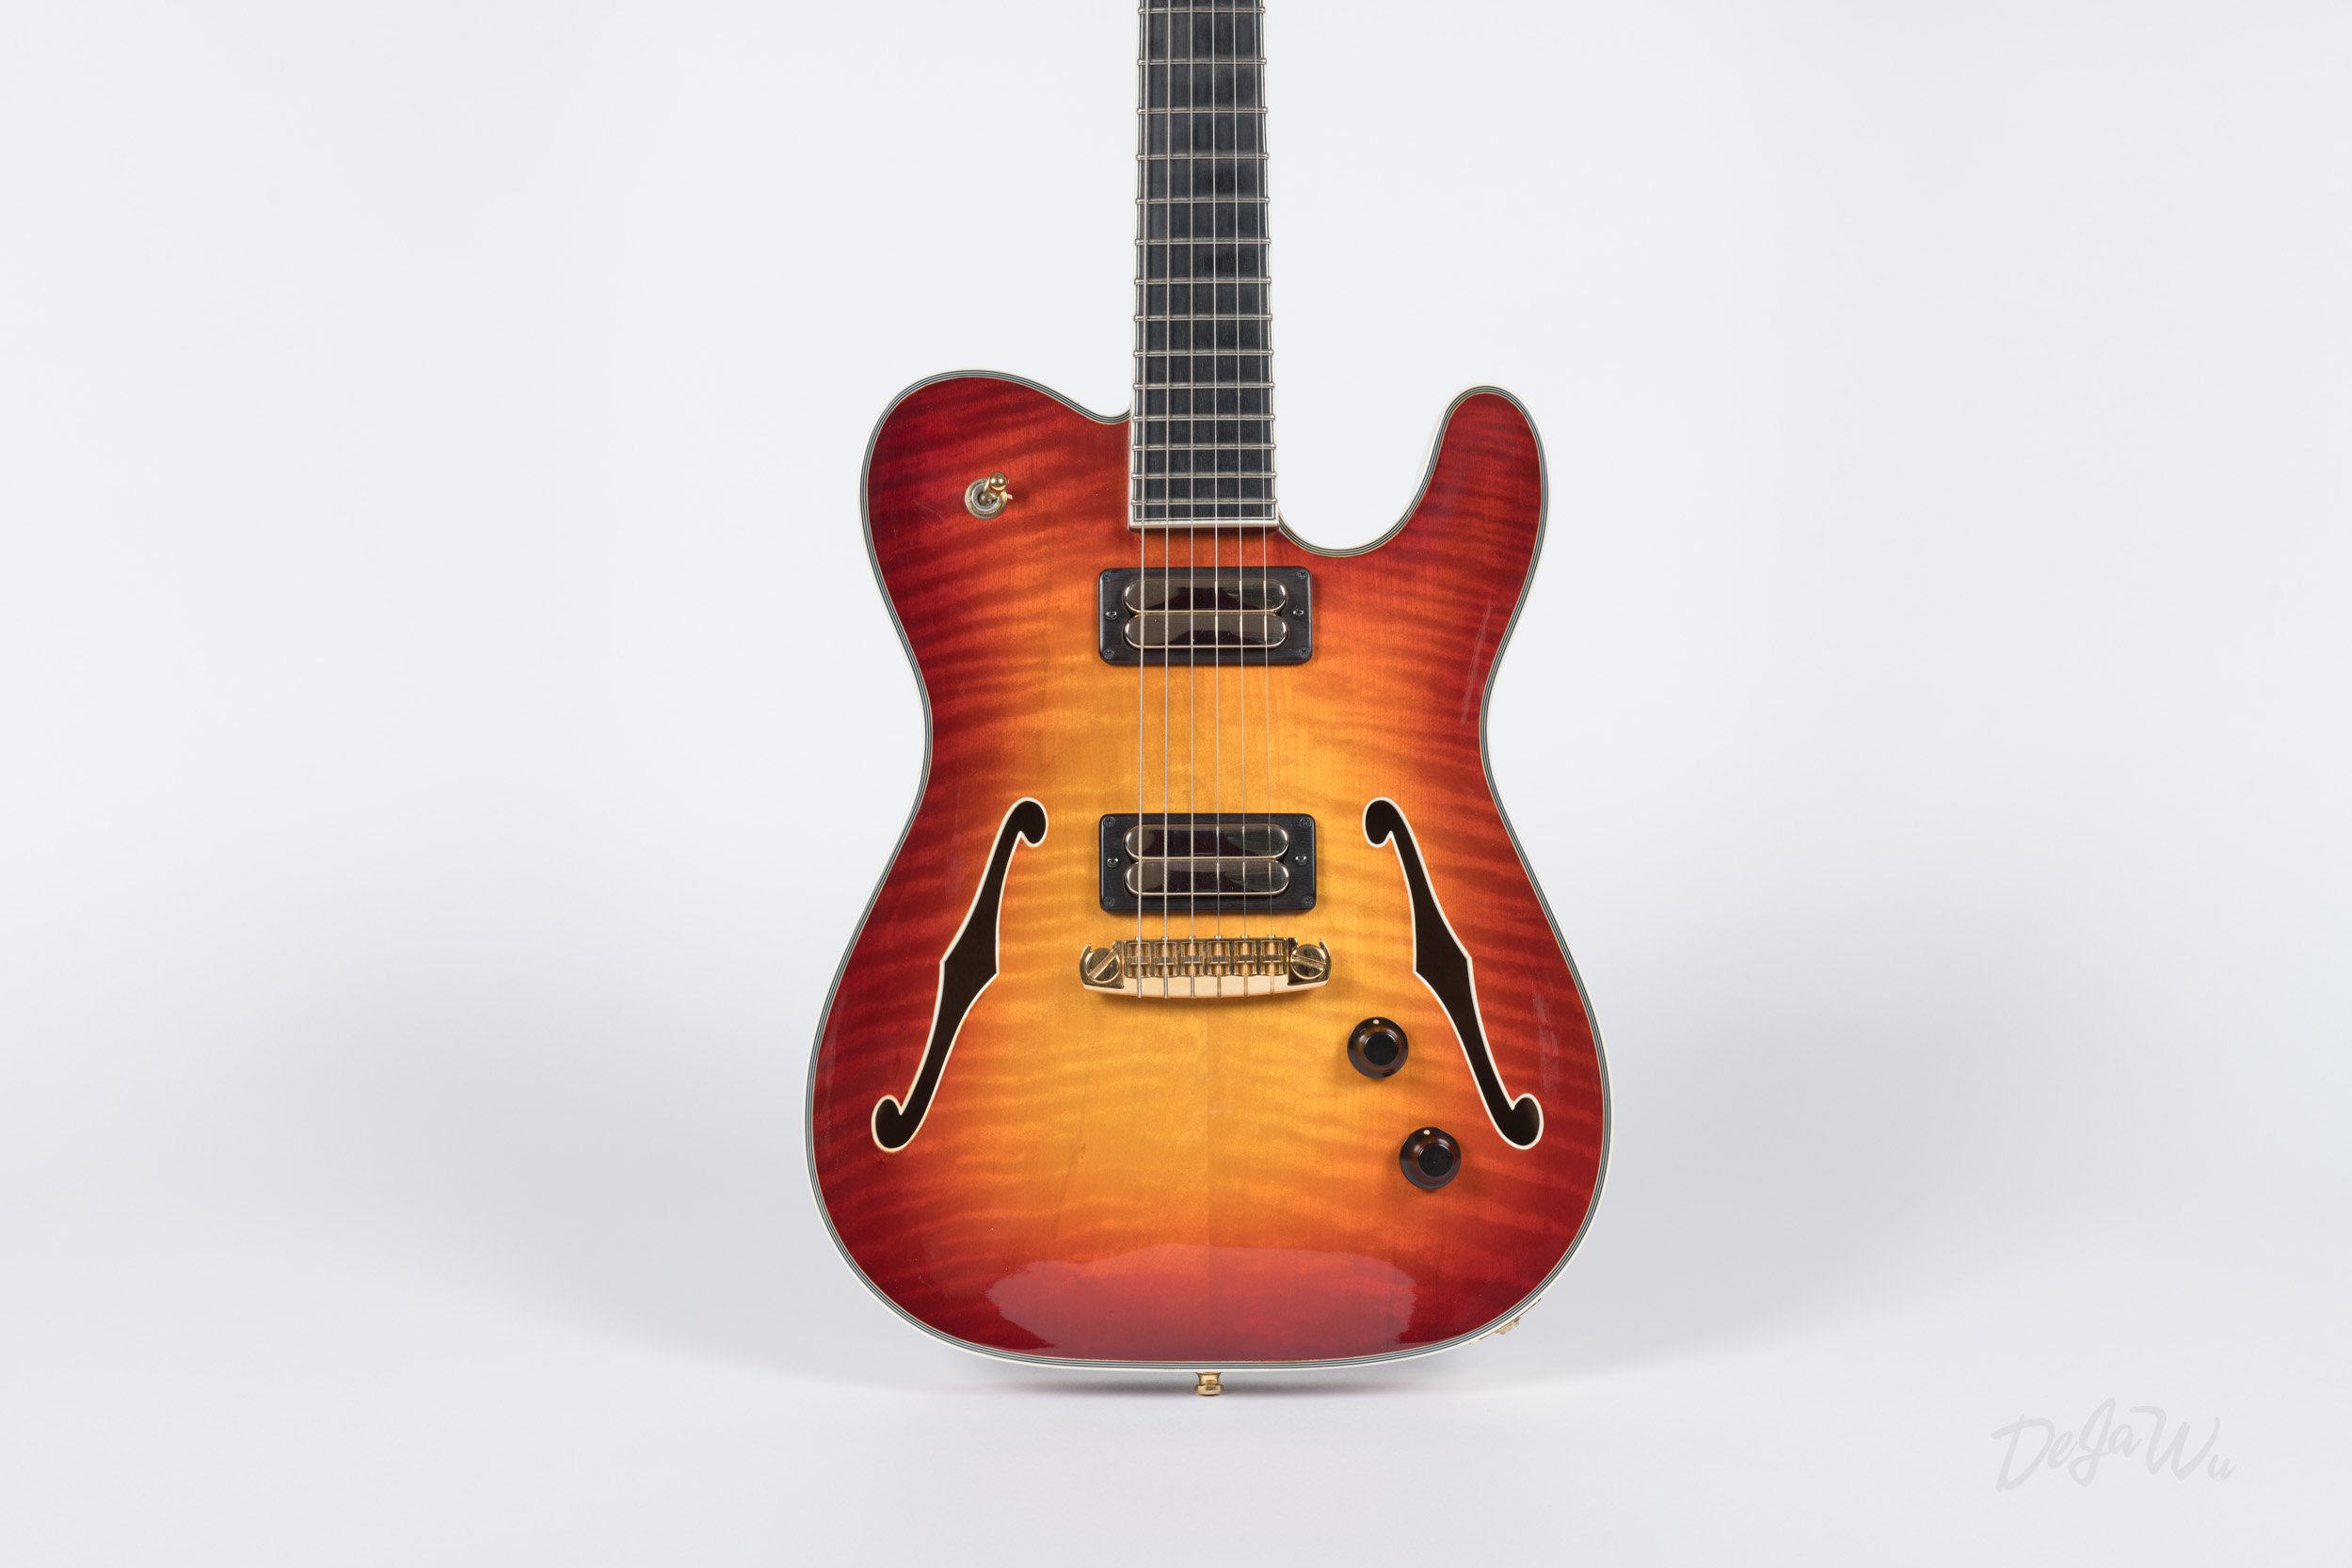 Dejawu Guitars - Hand carved semi acoustic guitar